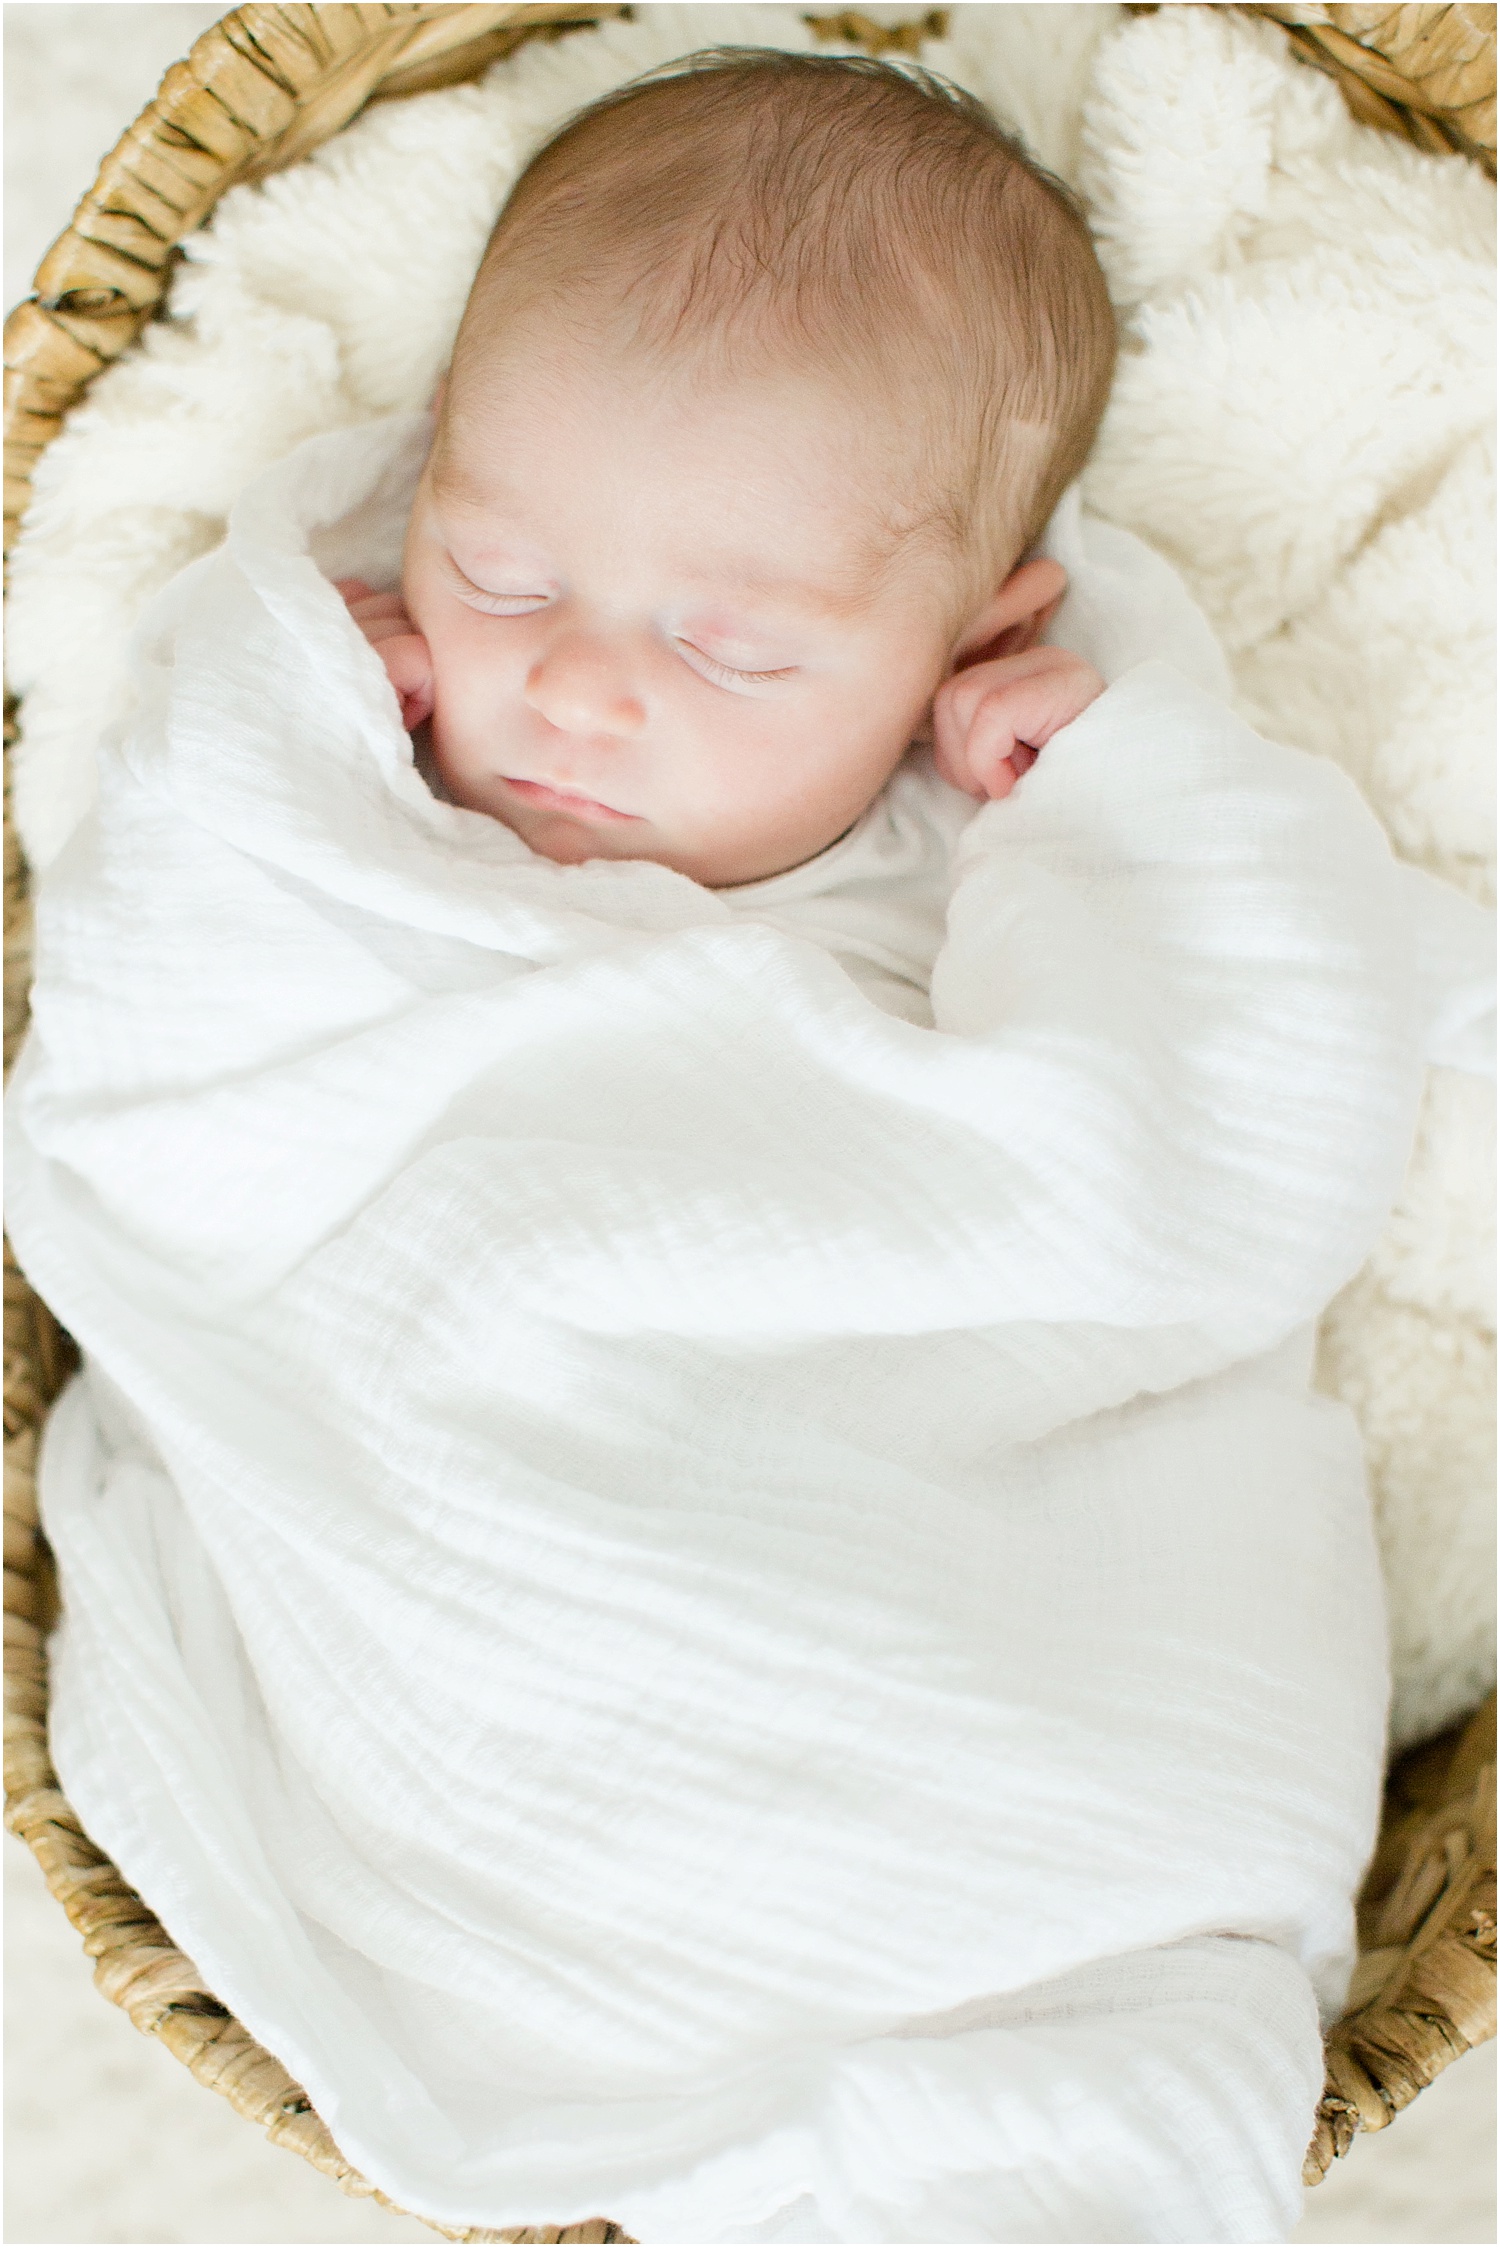 Newborn Pictures Ashley Powell Photogrpahy_0040.jpg